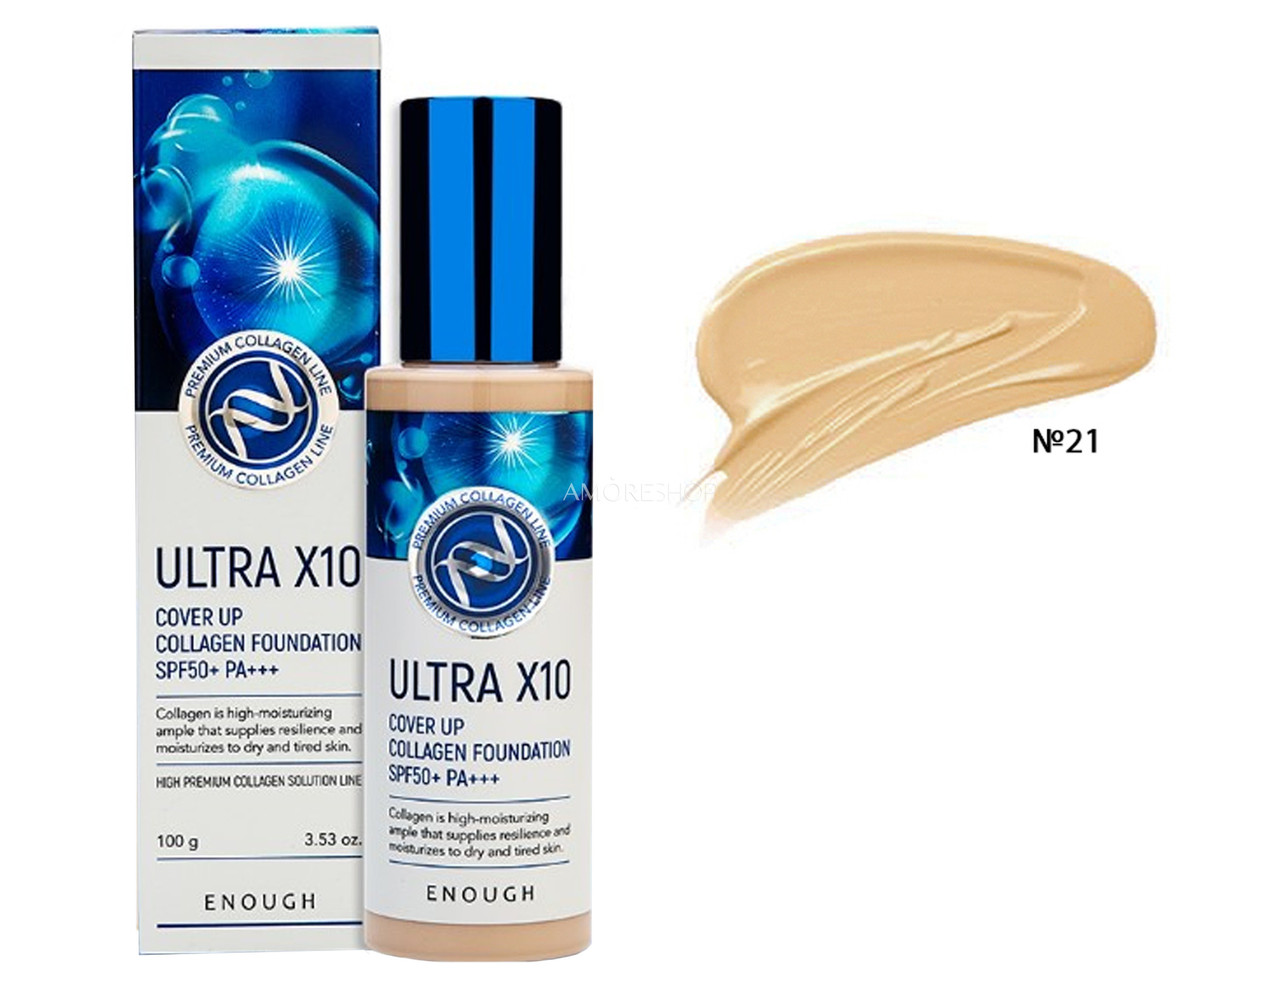 Tональный крем-Enough, Ultra X10 Cover Up Collagen Foundation Spf50+ Pa+++ №21, 100 g